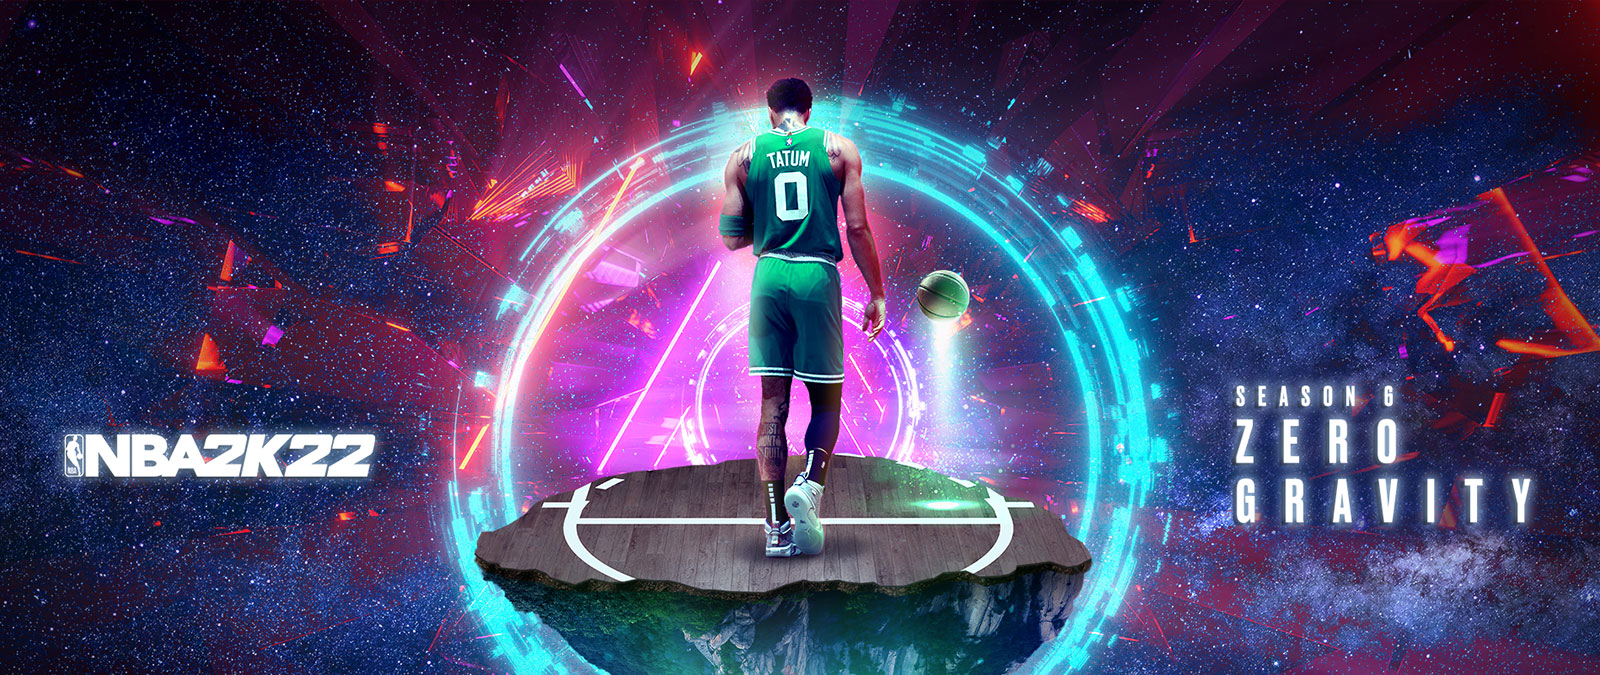 NBA 2K22，第 6 季 Zero Gravity，Tatum 站在一個漂浮在外太空中的籃球場上，周圍環繞著能量環。